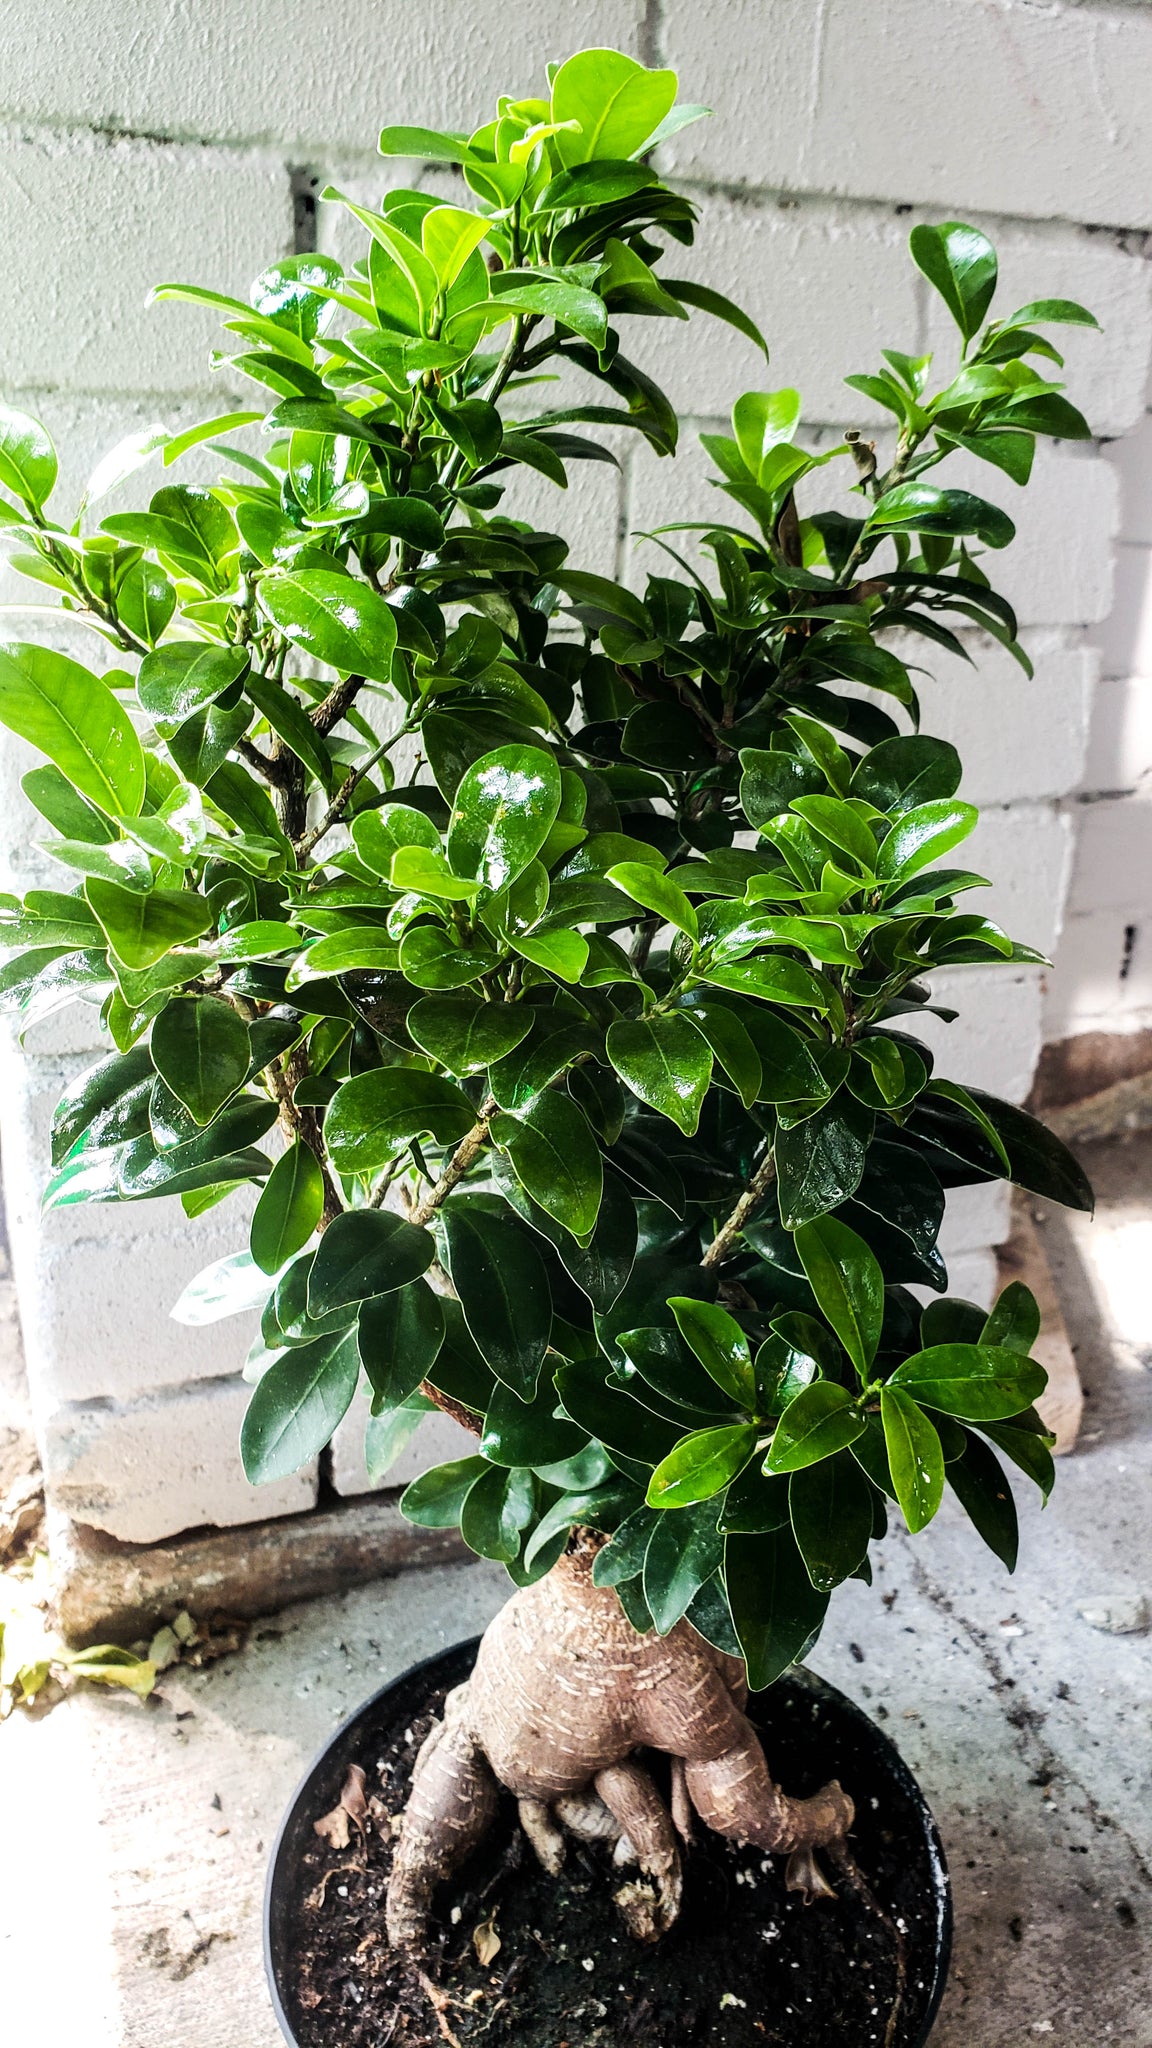 P5: Bonsai Tree (Ginseng Ficus)